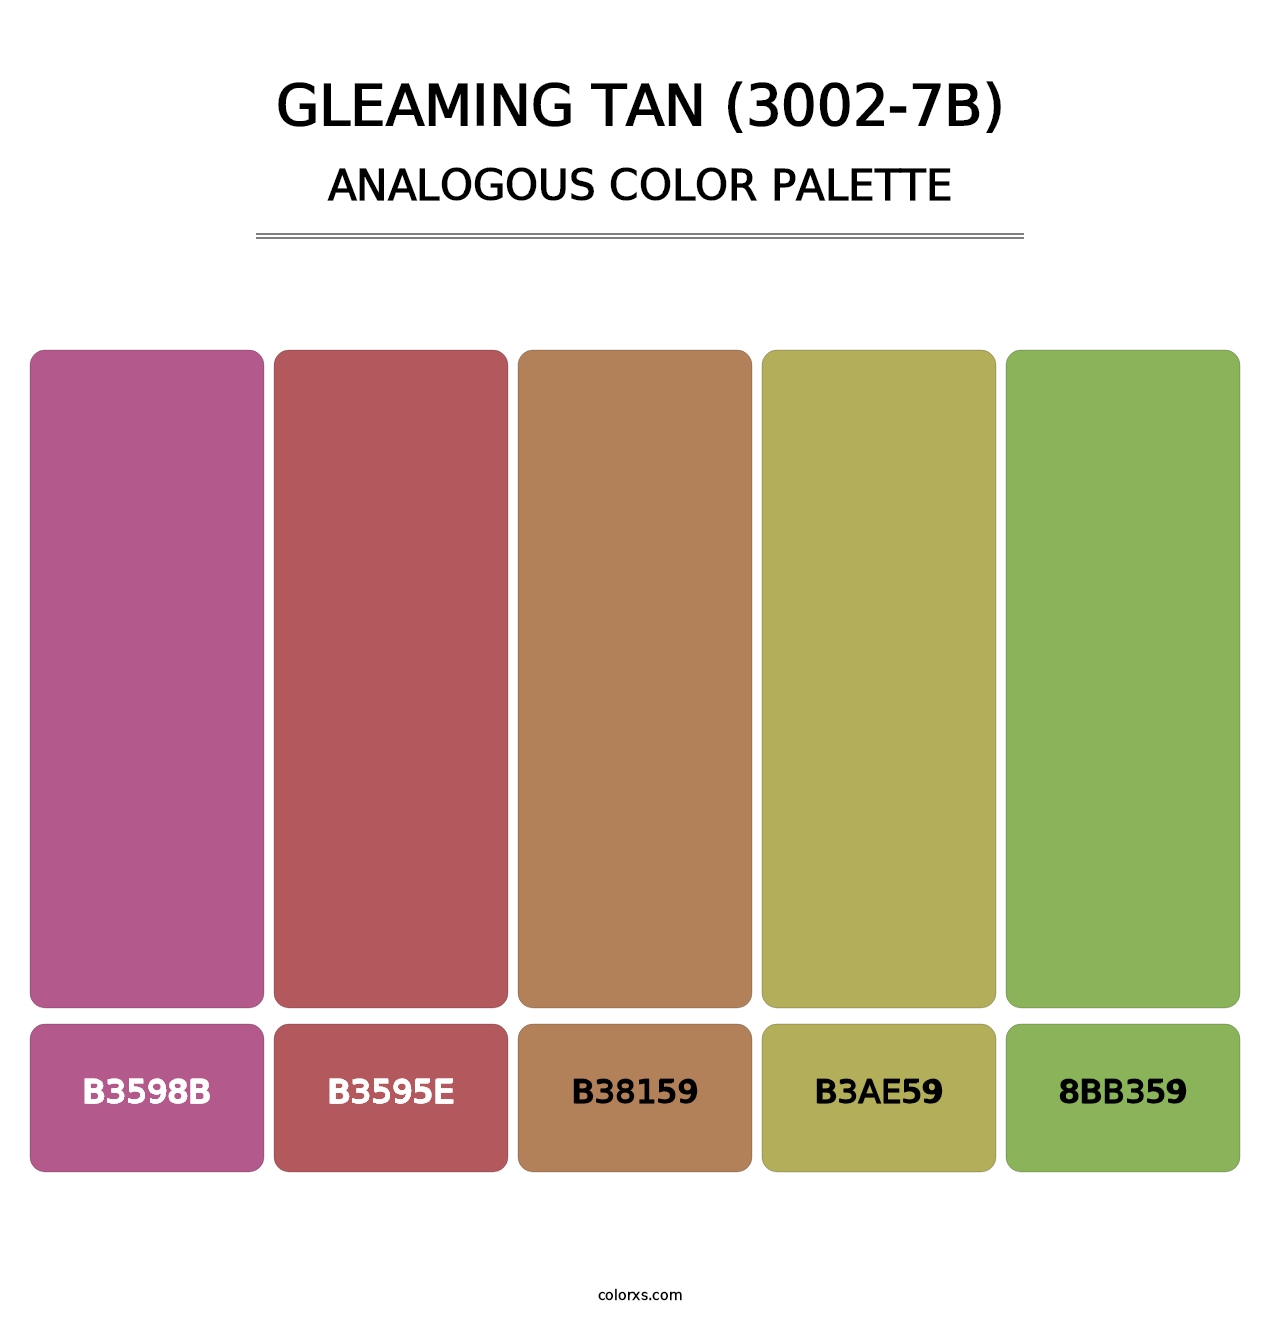 Gleaming Tan (3002-7B) - Analogous Color Palette